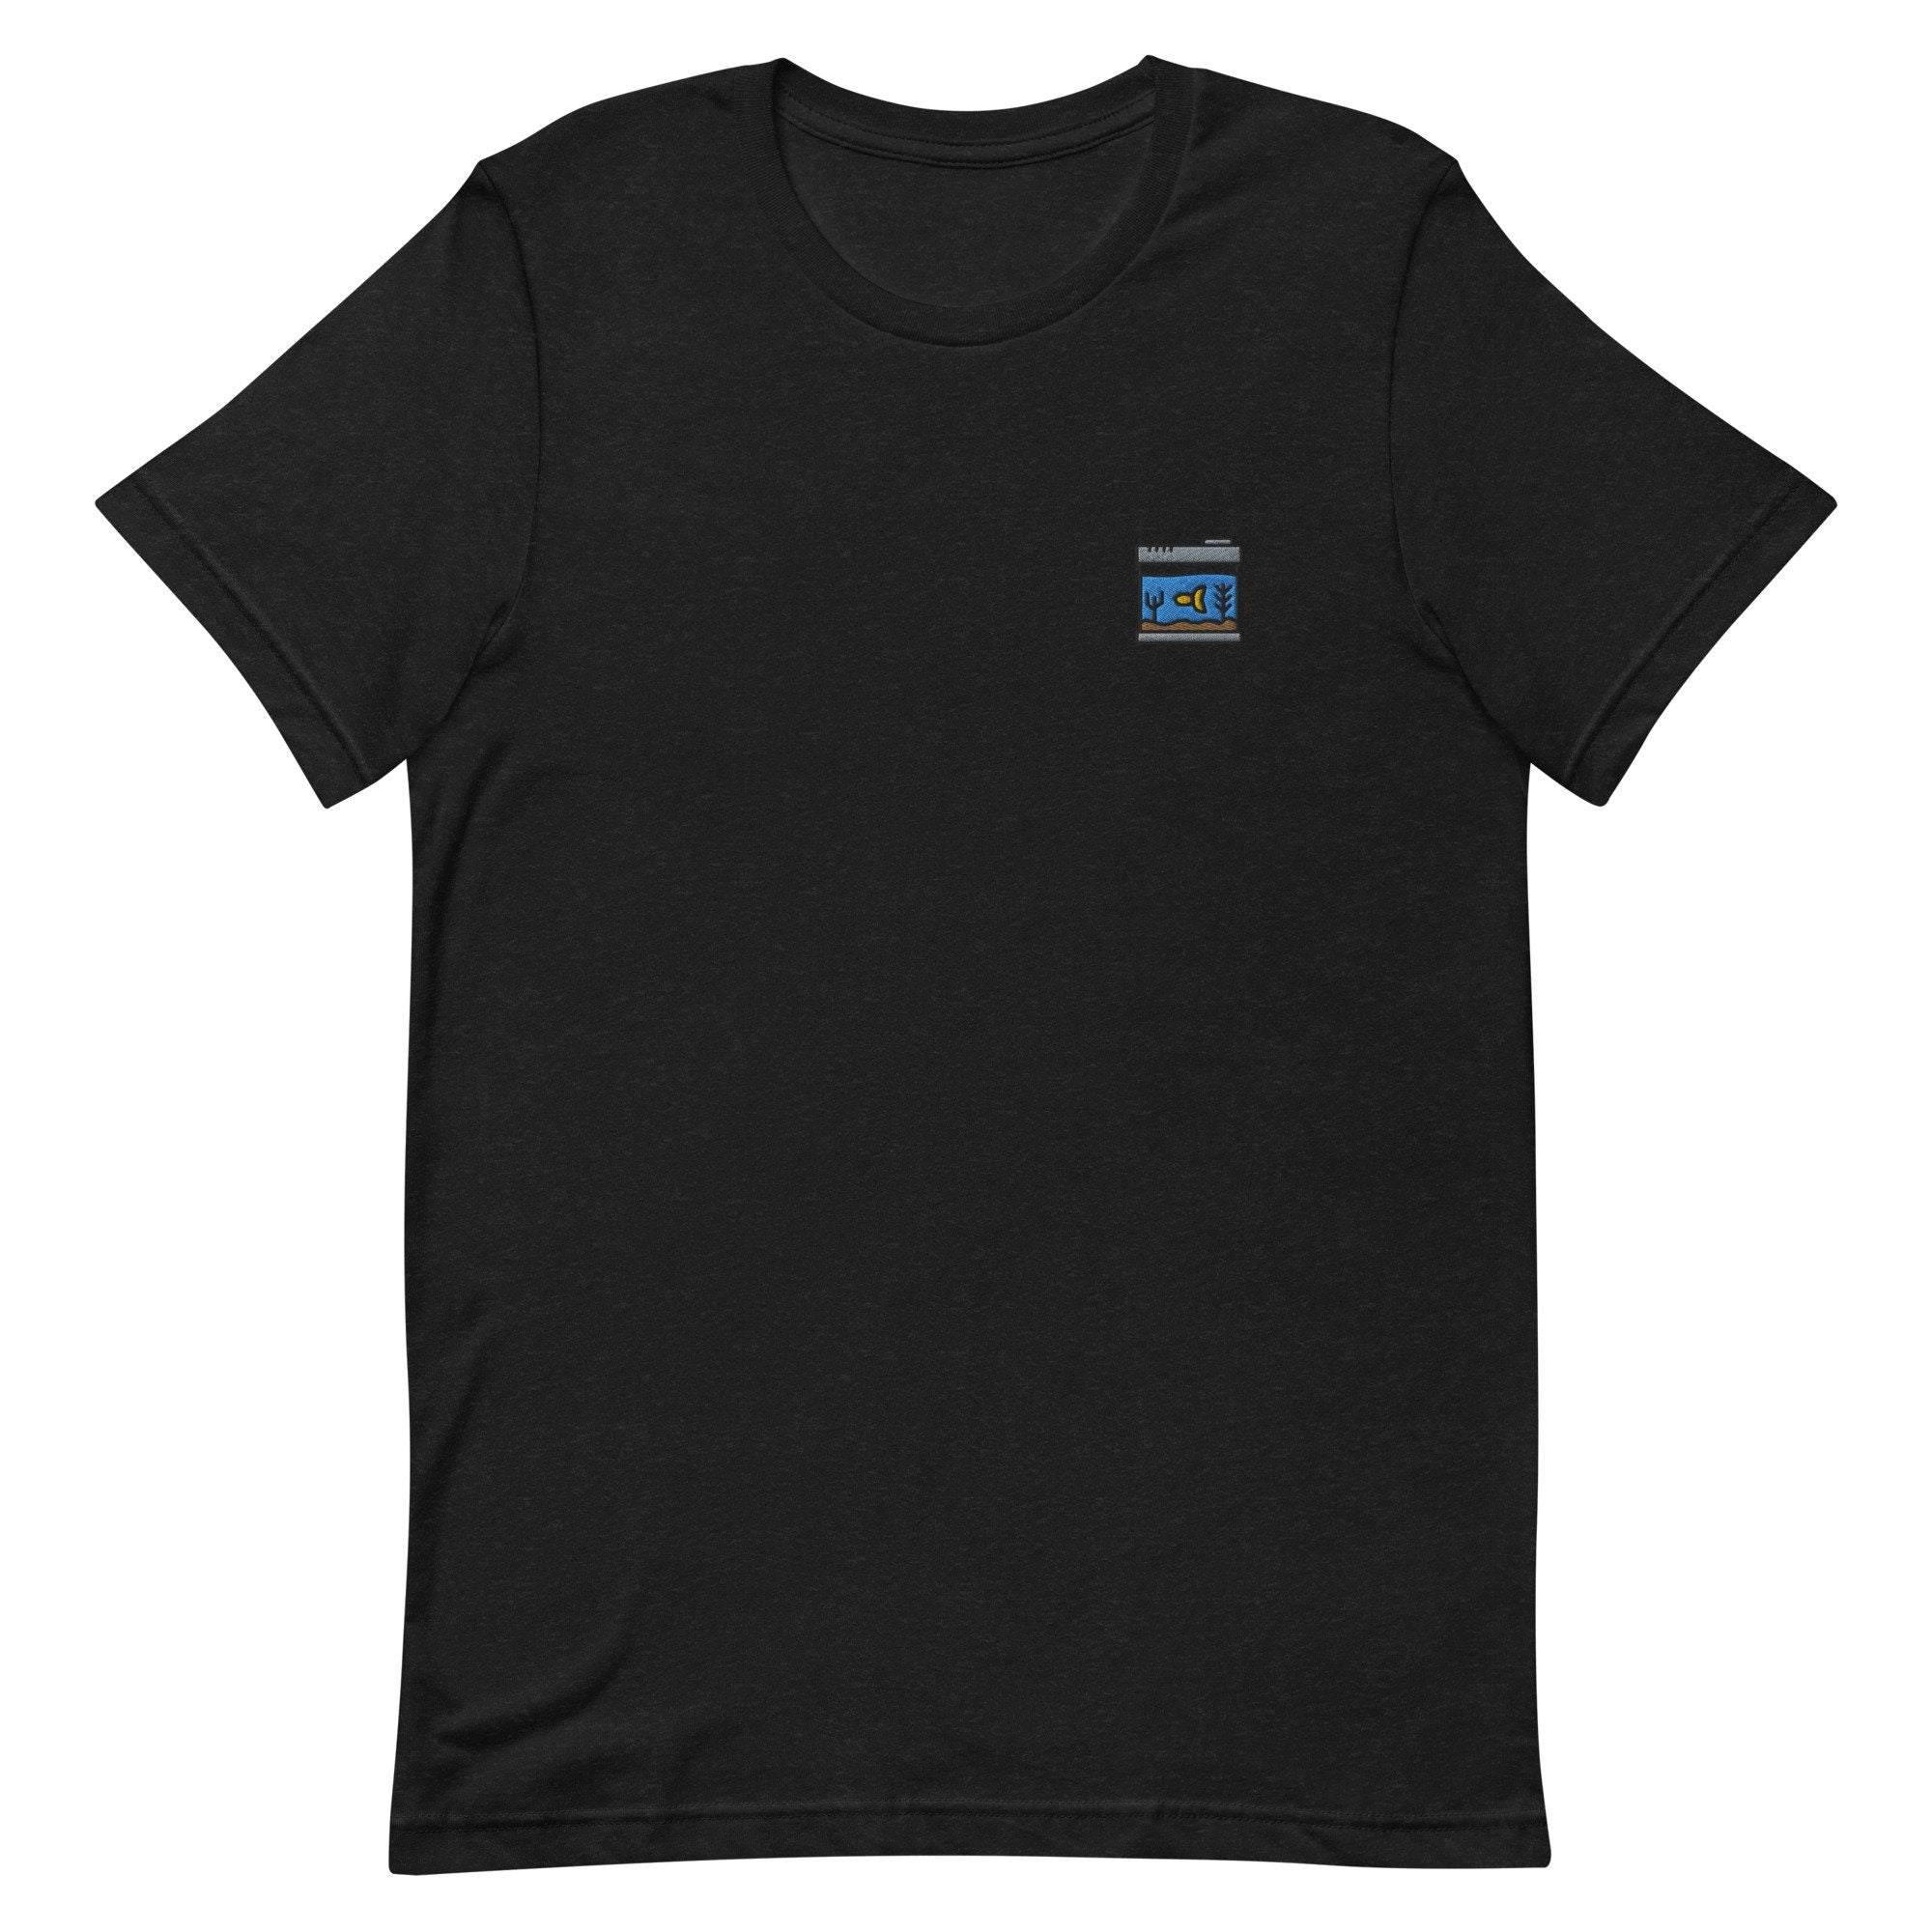 Aquarium Premium Men's T-Shirt, Embroidered Men's T-Shirt Gift for Boyfriend, Men's Short Sleeve Shirt - Multiple Colors